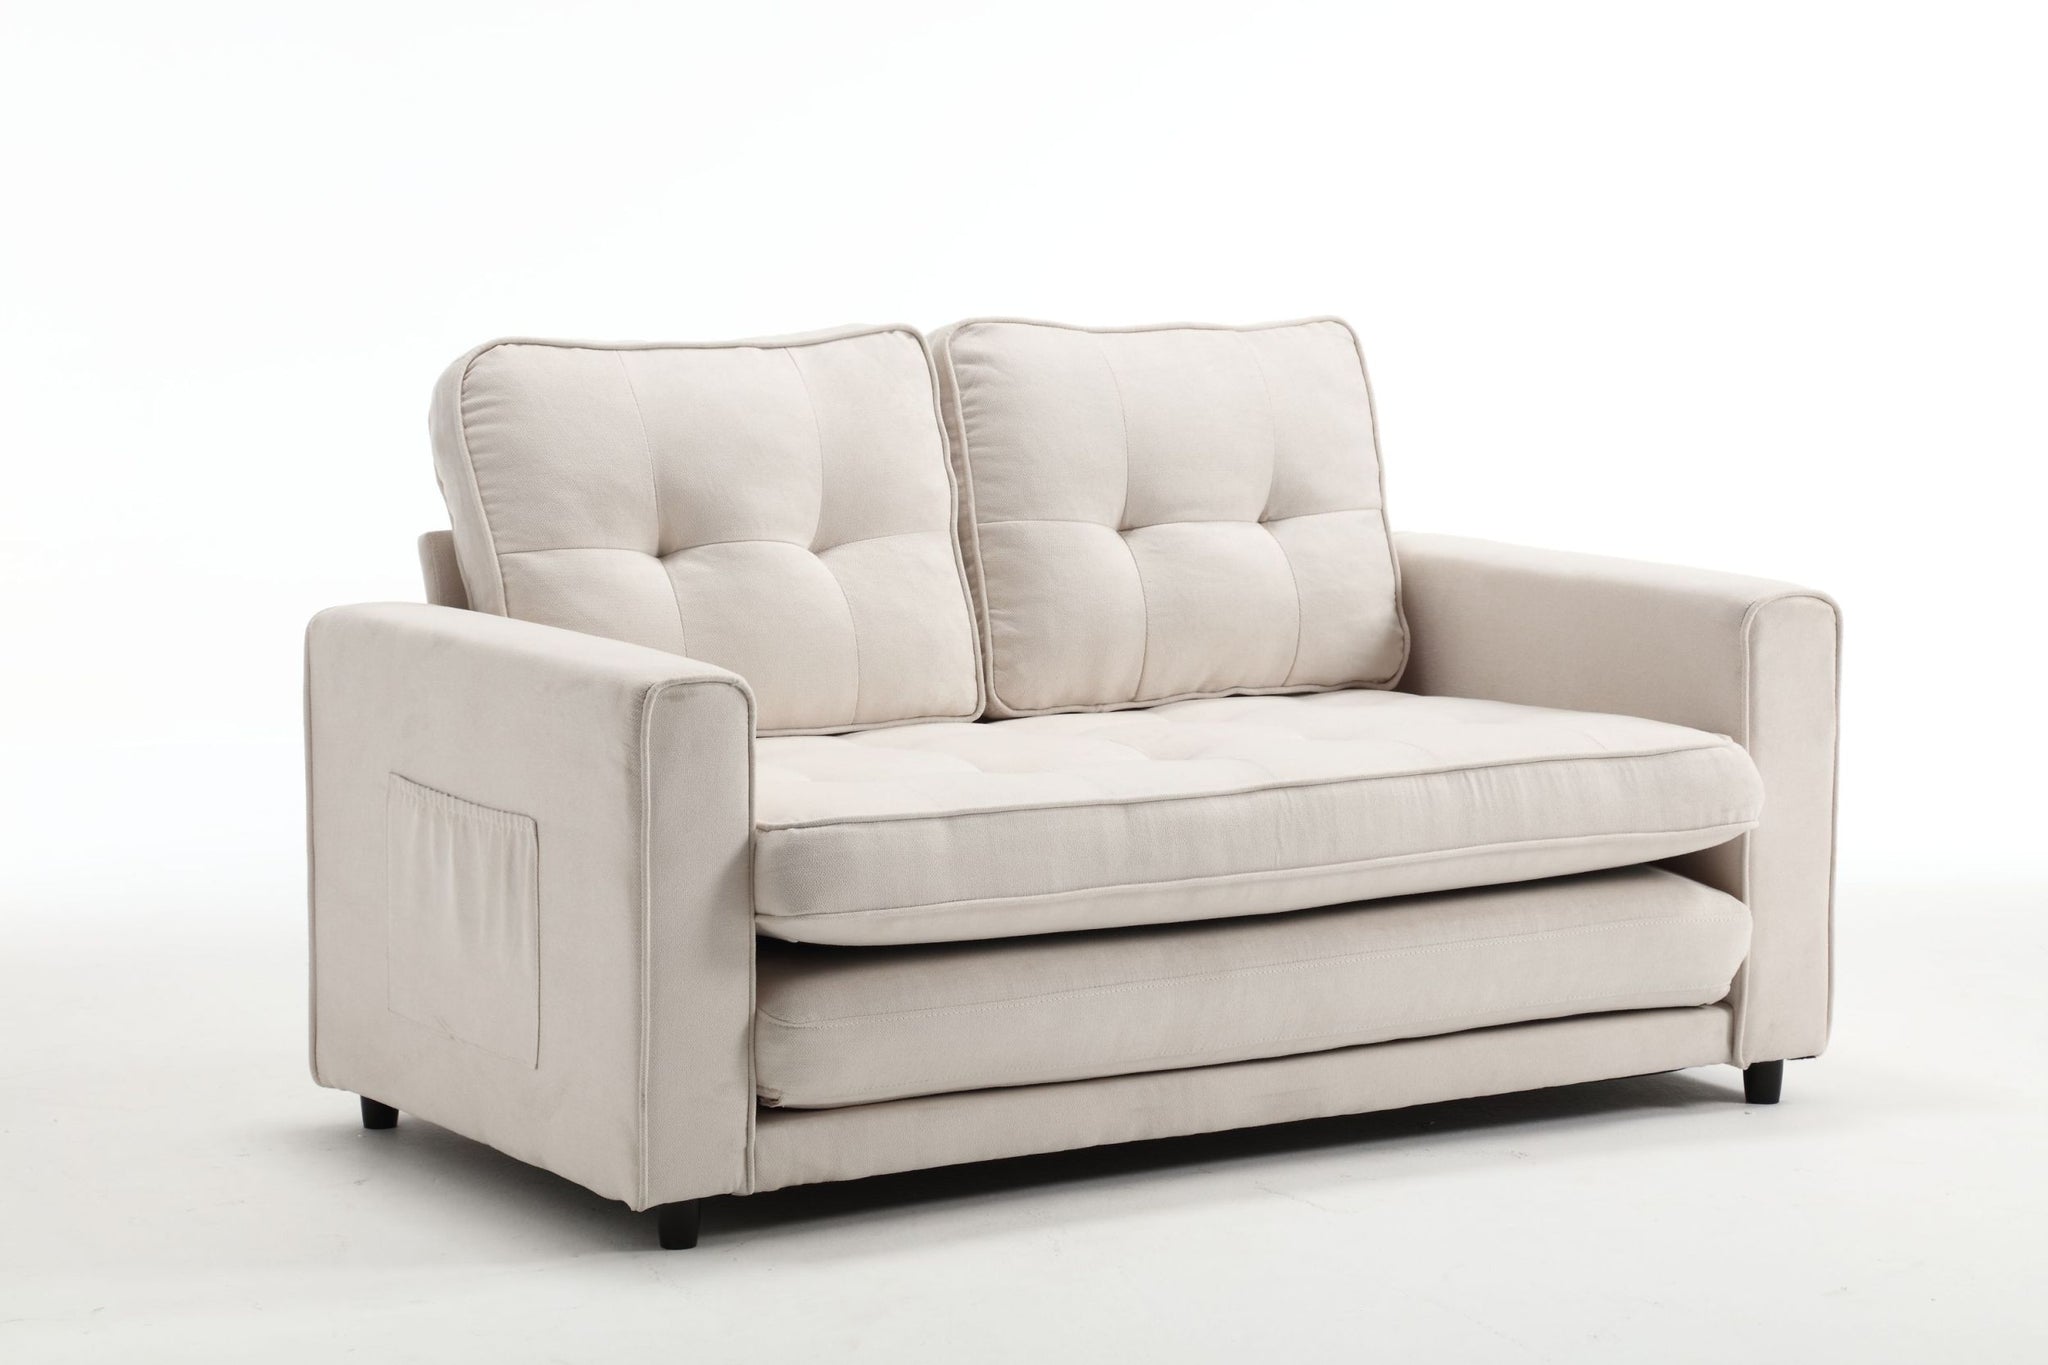 3 Fold Sofa,Convertible Futon Couch sleeper beige-velvet-wood-primary living